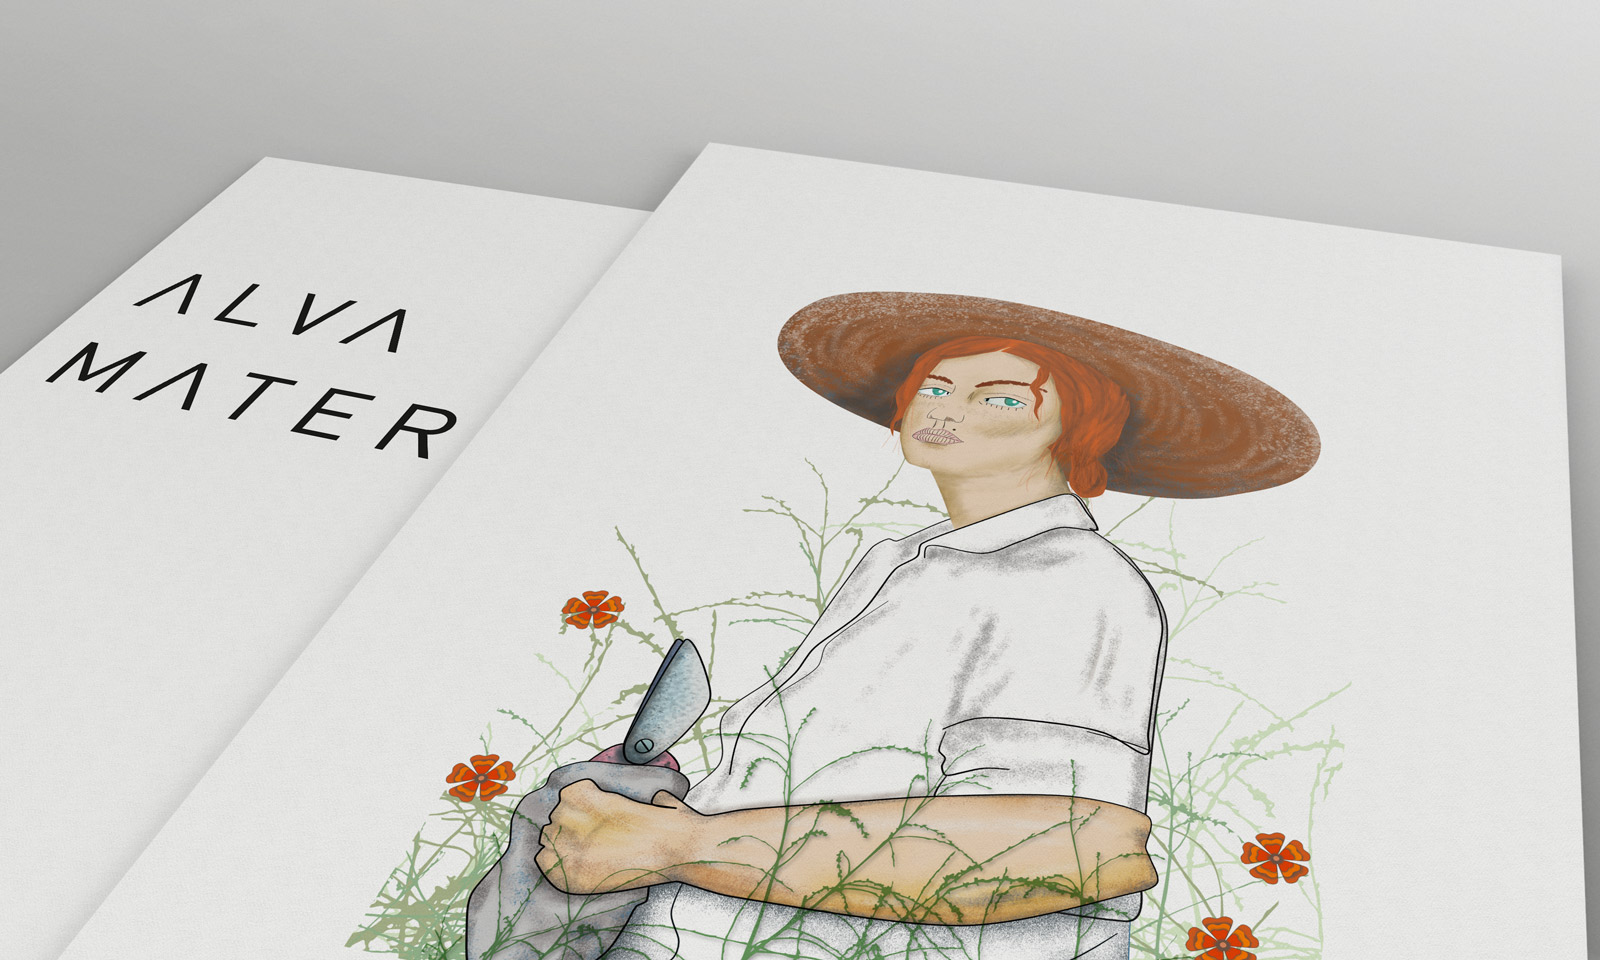 Portfolio of graphic and creative design of label and packaging design for wine ALVA MATER